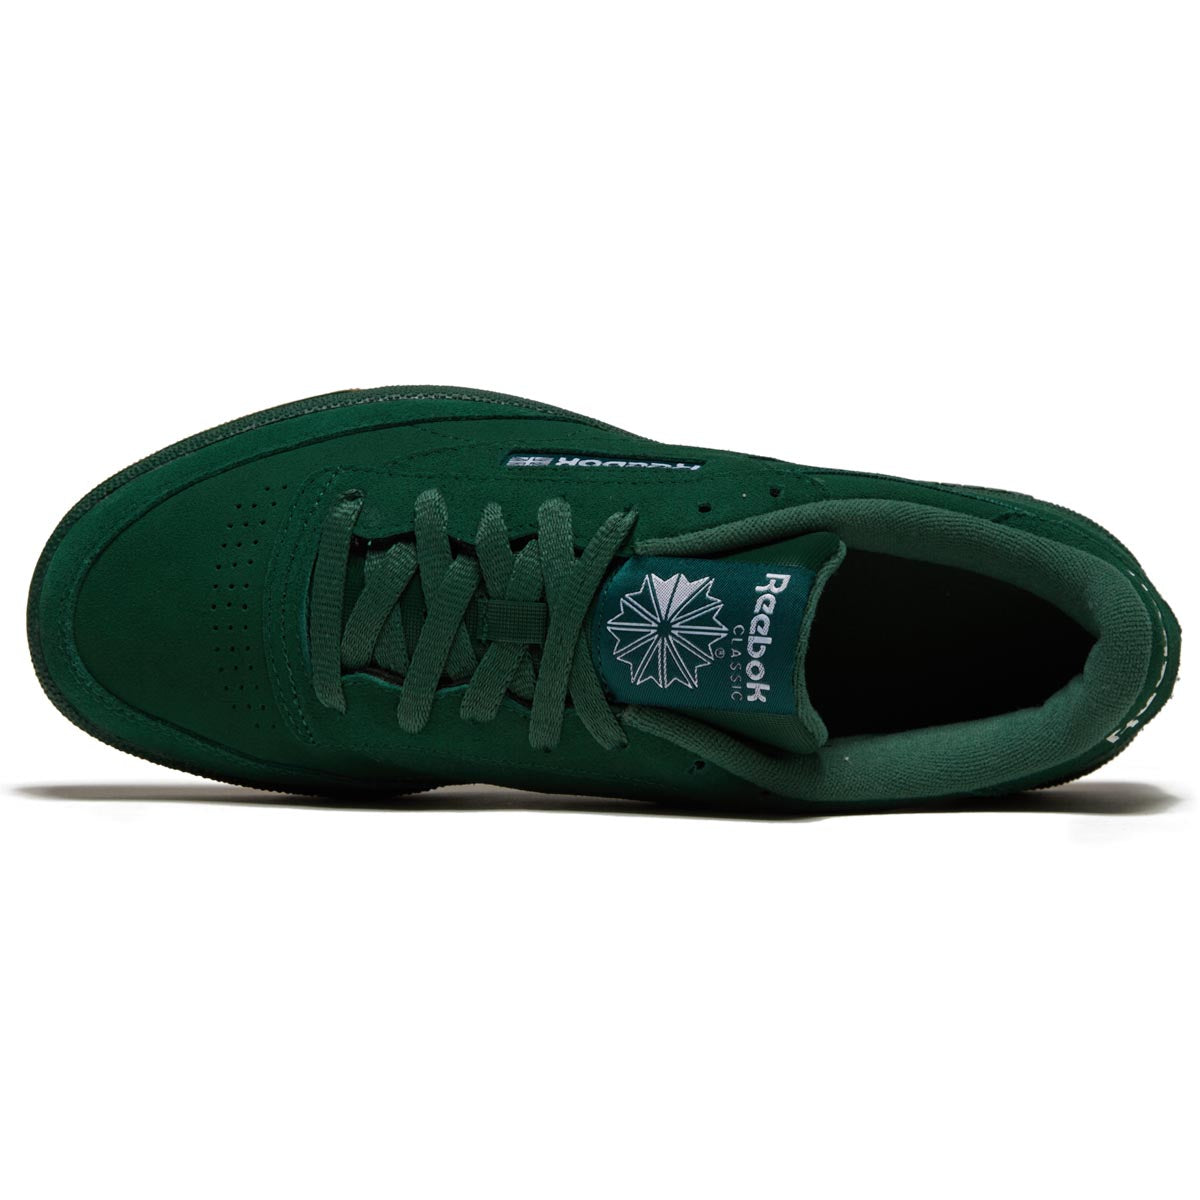 Reebok Club C 85 Shoes - Dark Green/White image 3